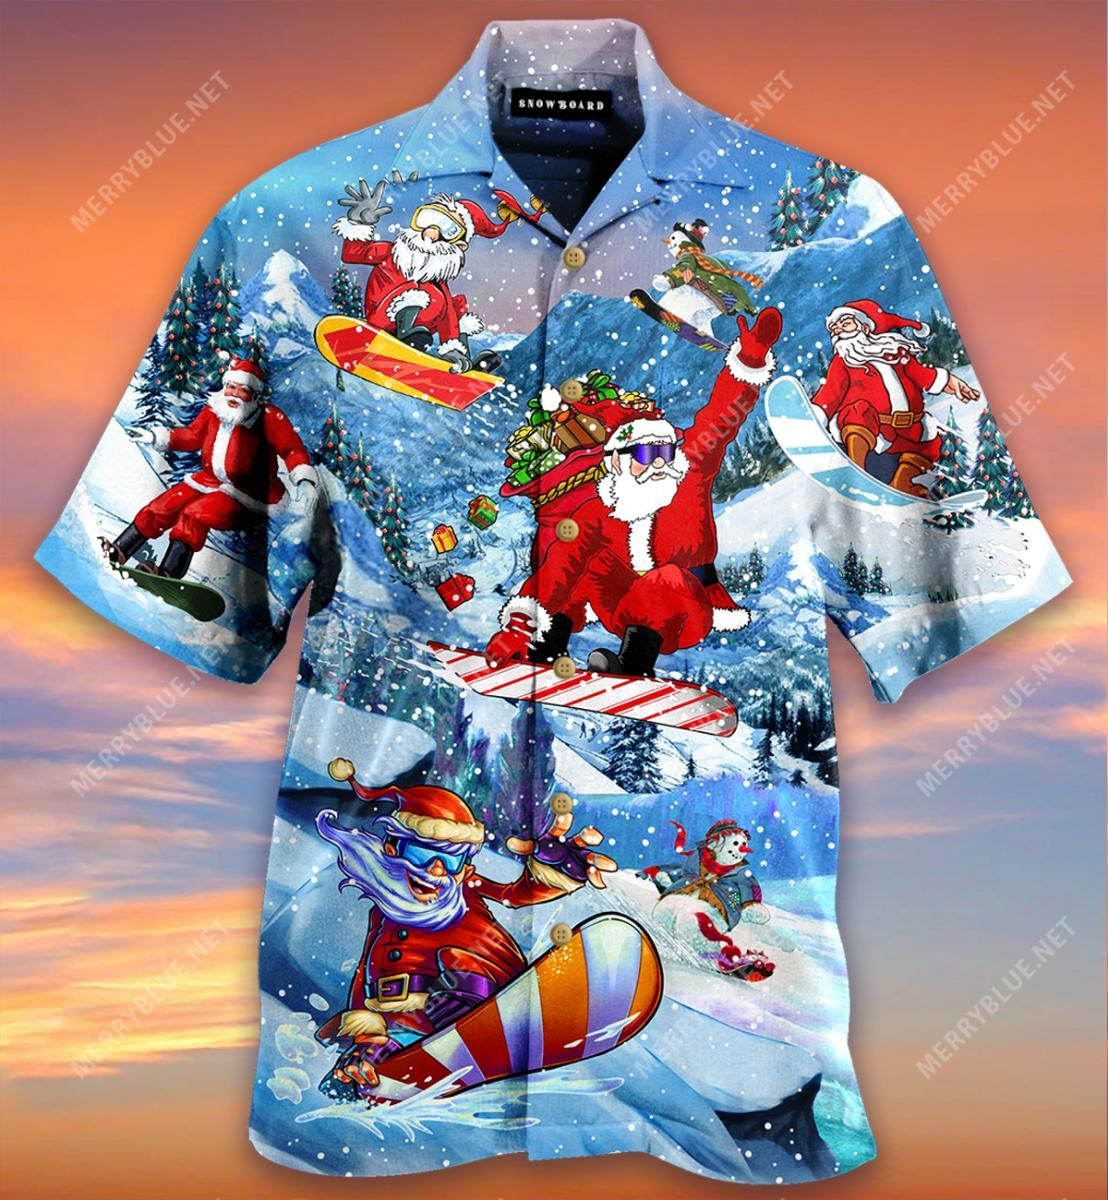 Close To Heaven Down To Earth Snowboarding Aloha Hawaiian Shirt Colorful Short Sleeve Summer Beach Casual Shirt For Men And Women